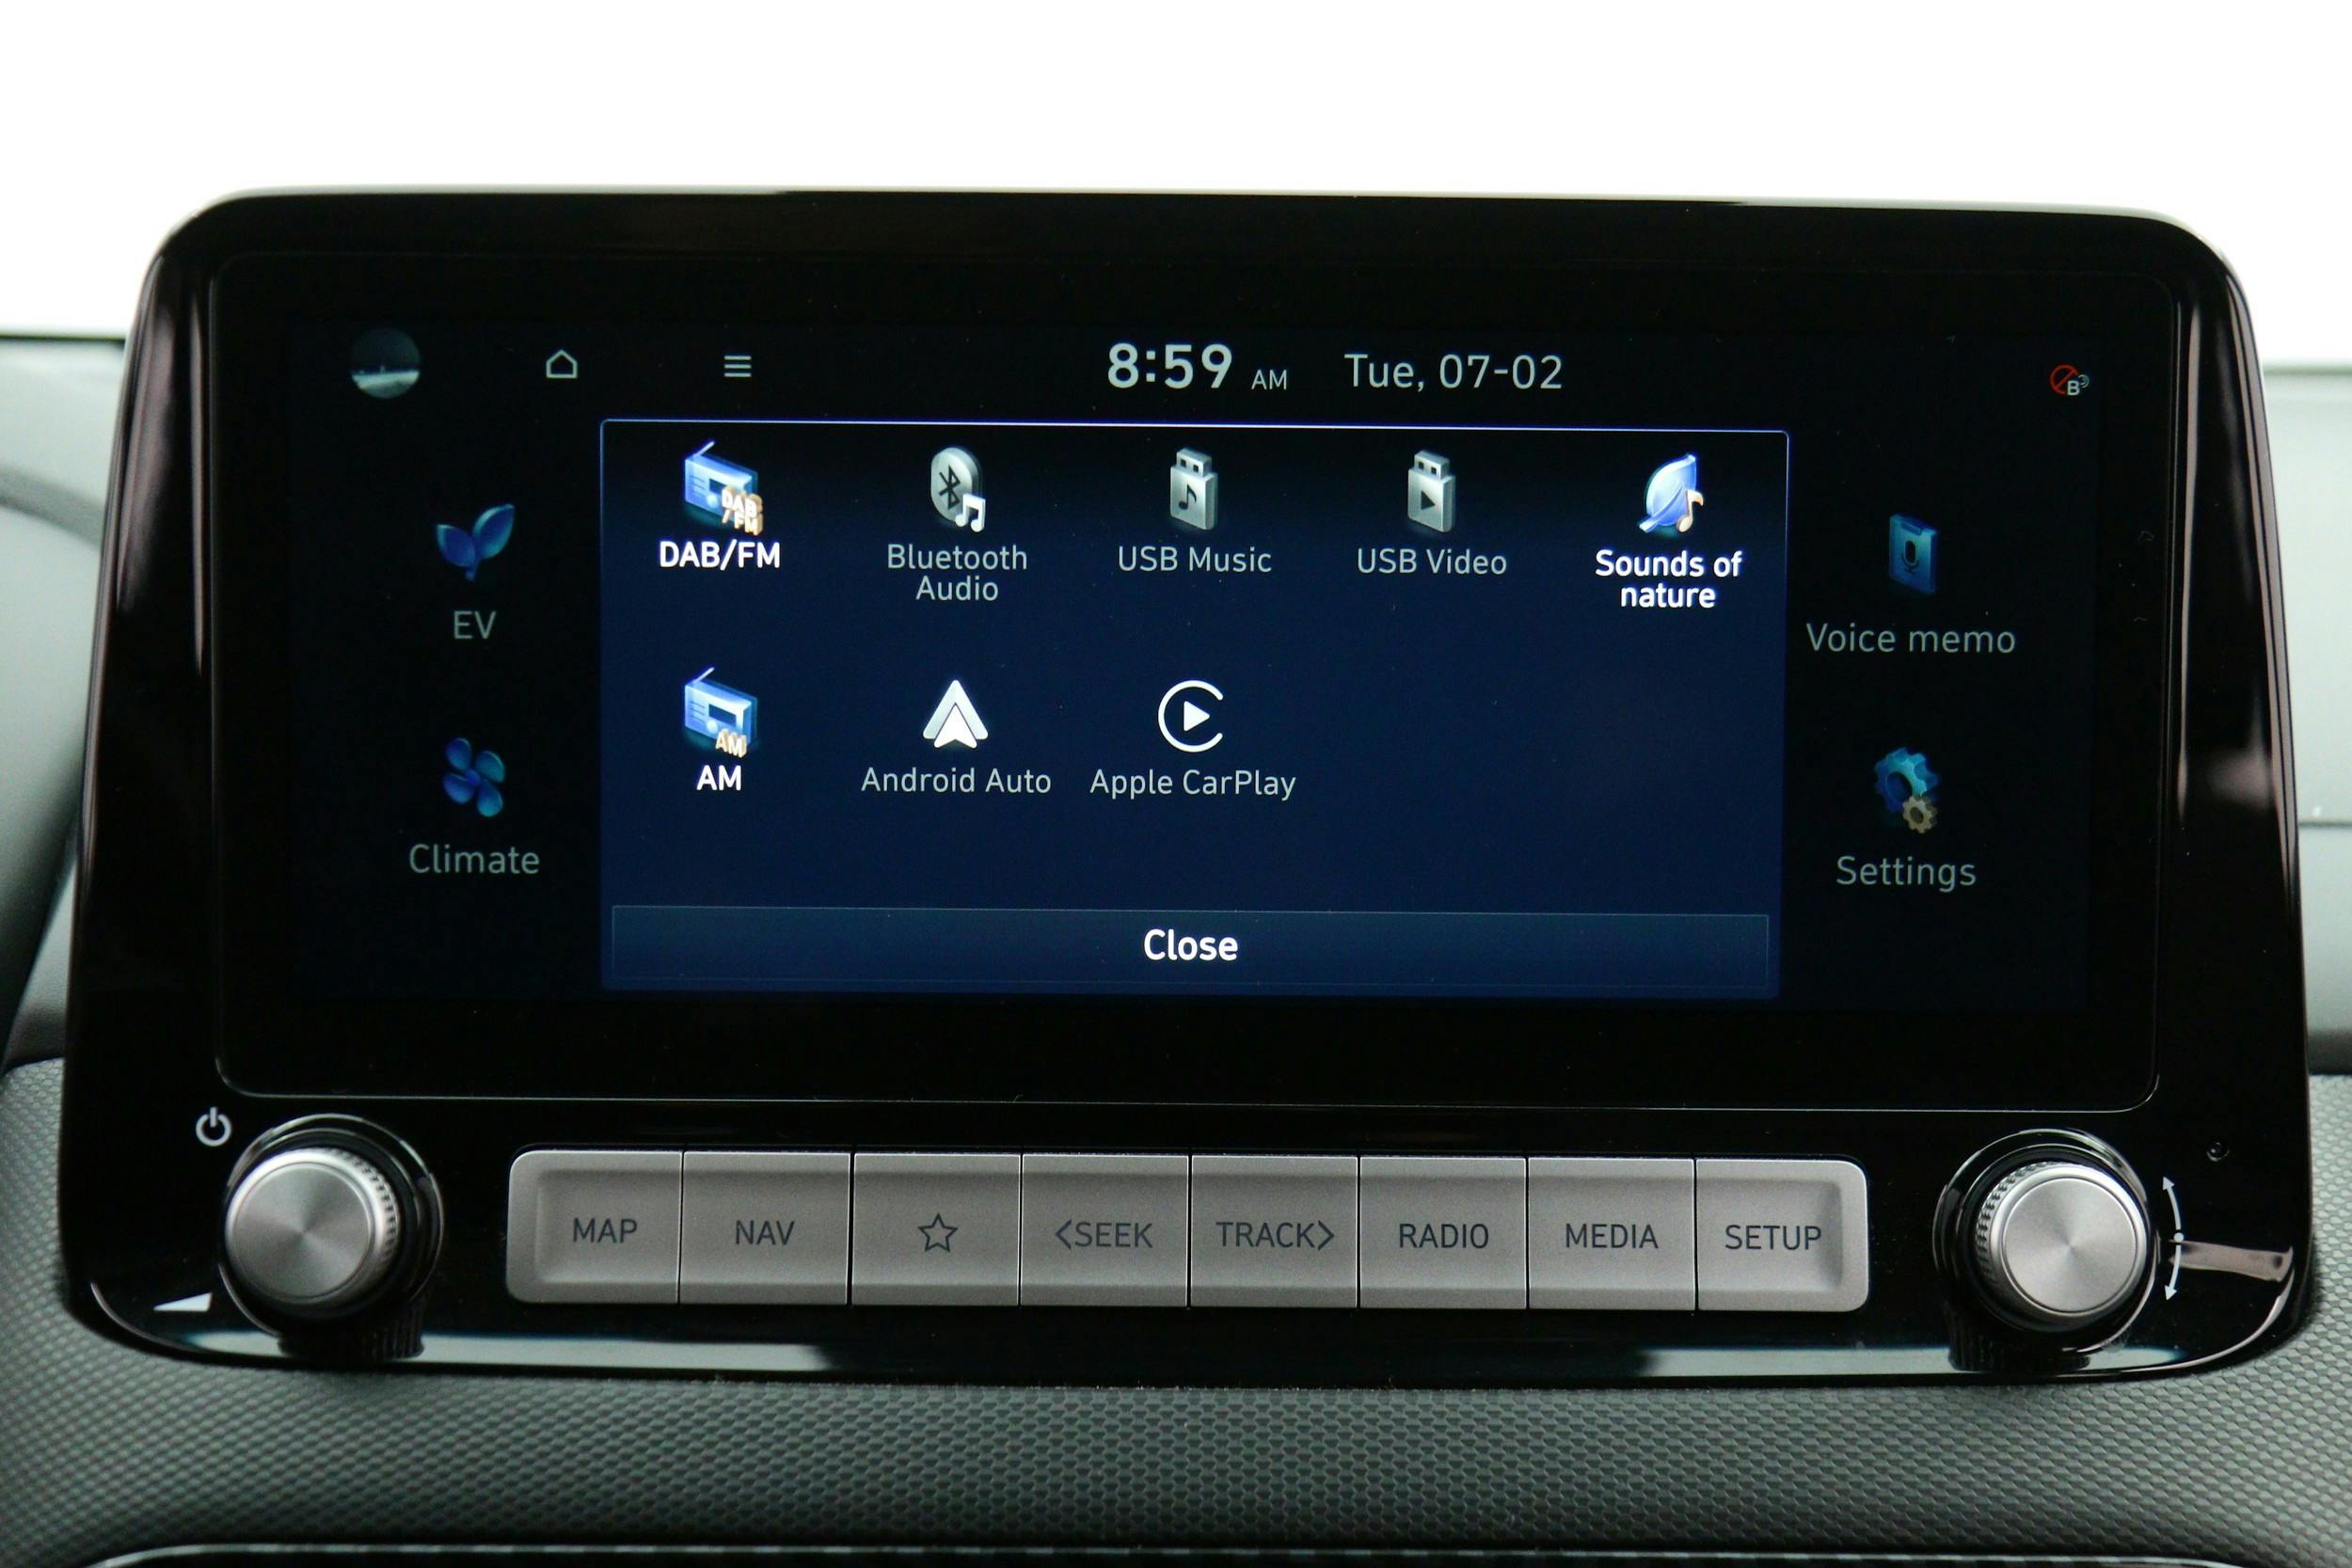 Infotaintmentsystem - Apple Carplay, Android Auto, Bluetooth